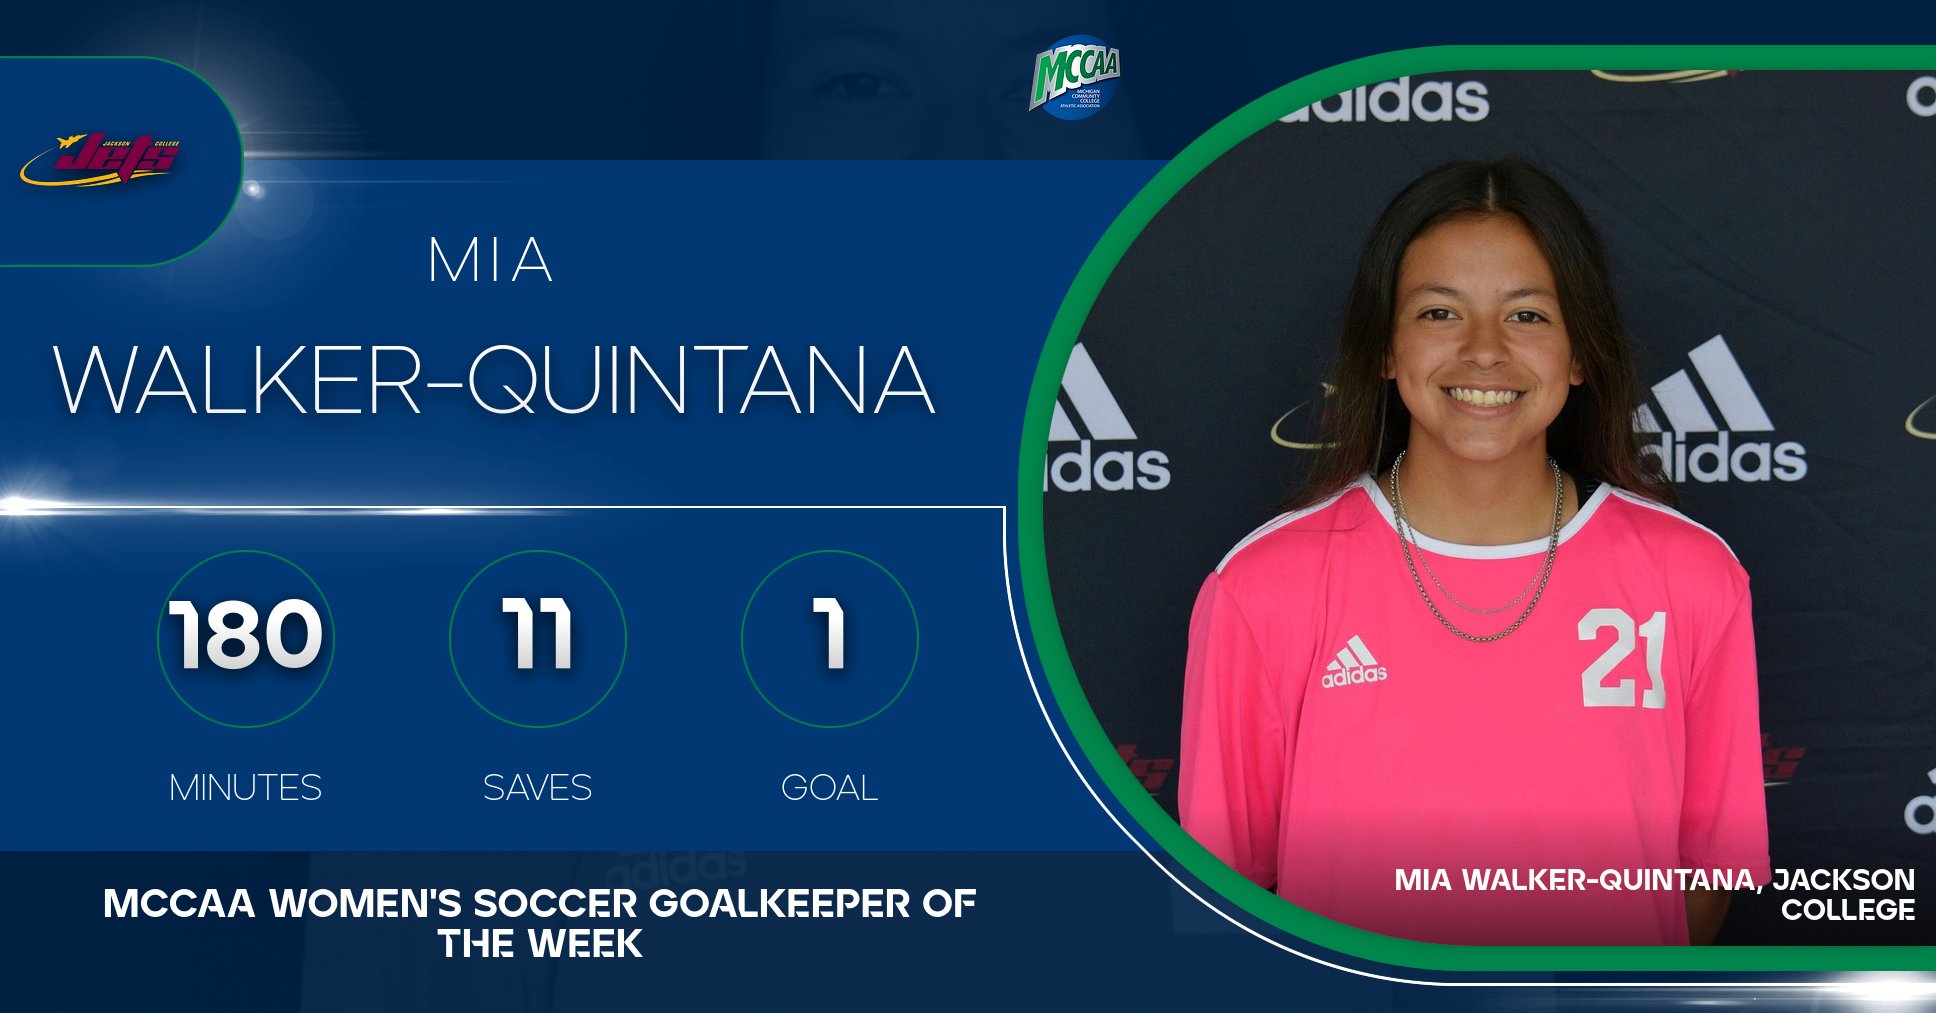 Mia Walker-Quintana, MCCAA Women's Soccer Goalkeeper of the Week, jackson College